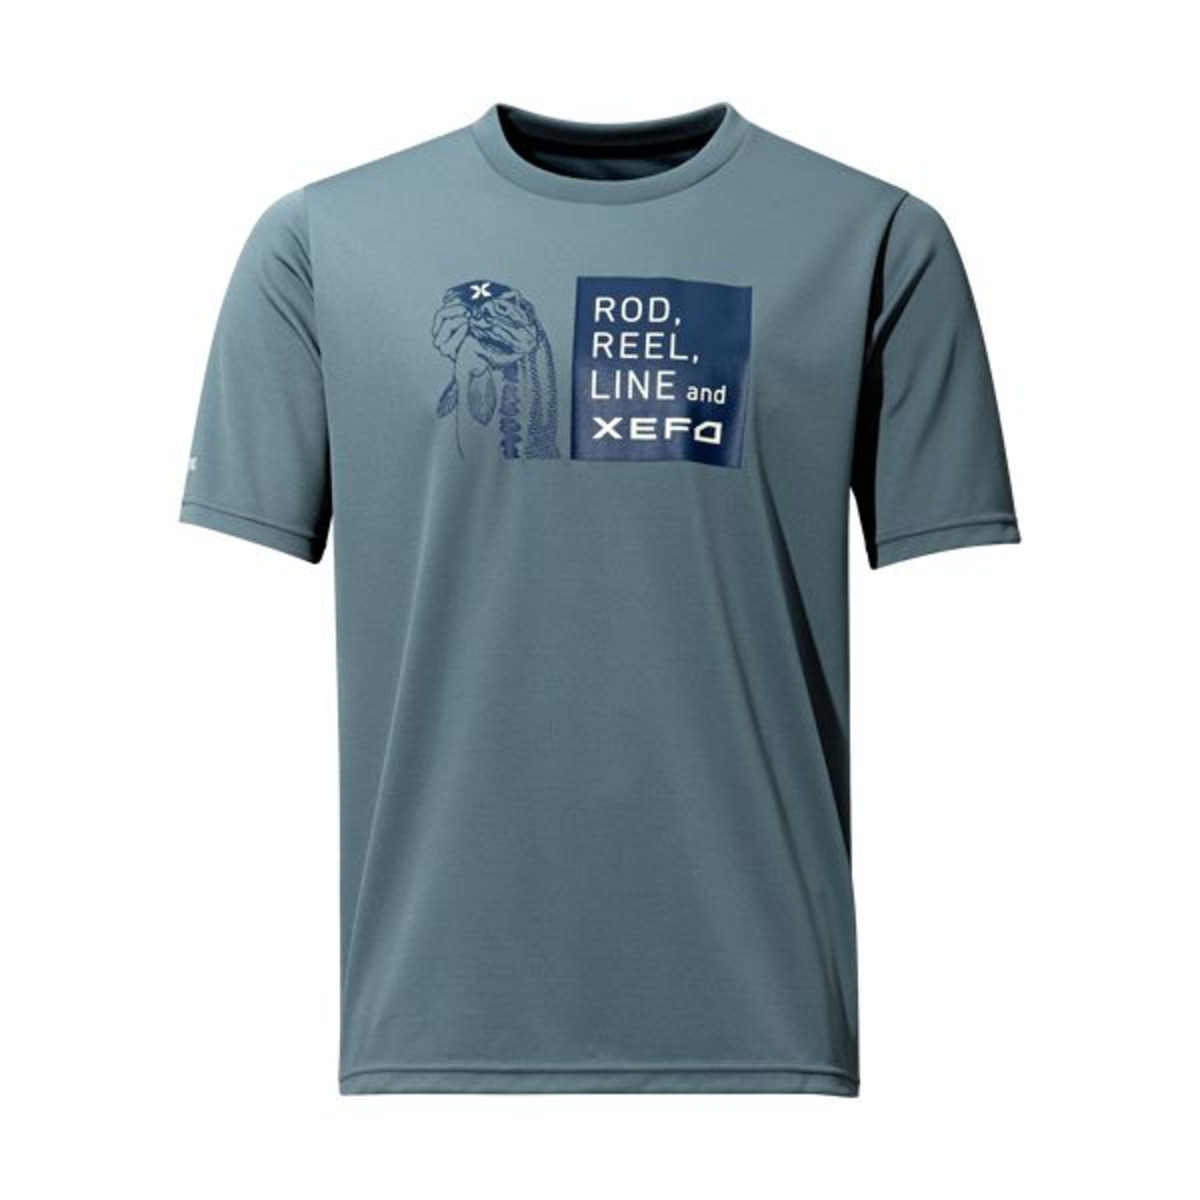 Shimano T-Shirt Manches Courtes Xefo - L - Cadet Blue